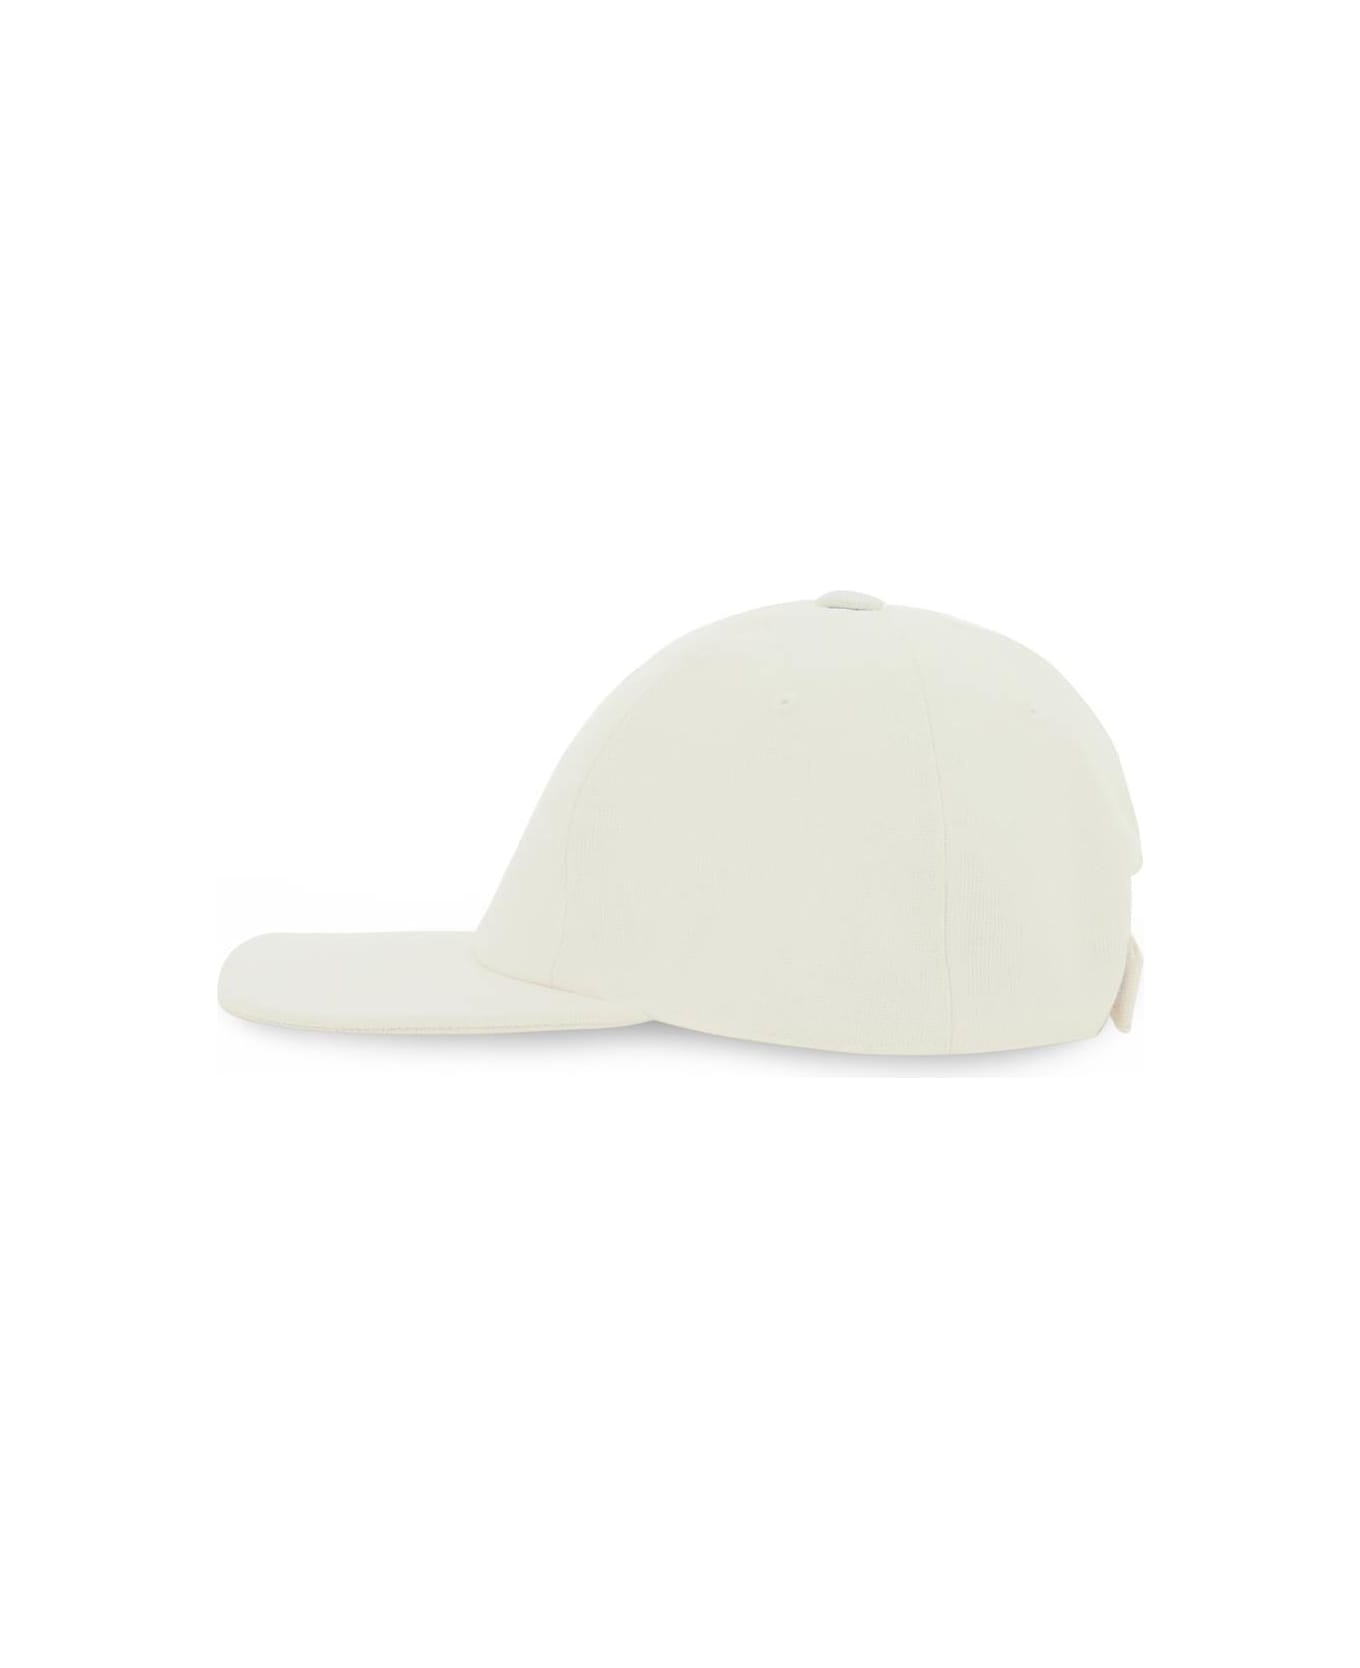 Stella McCartney Logo Baseball Cap - FROST (White) 帽子